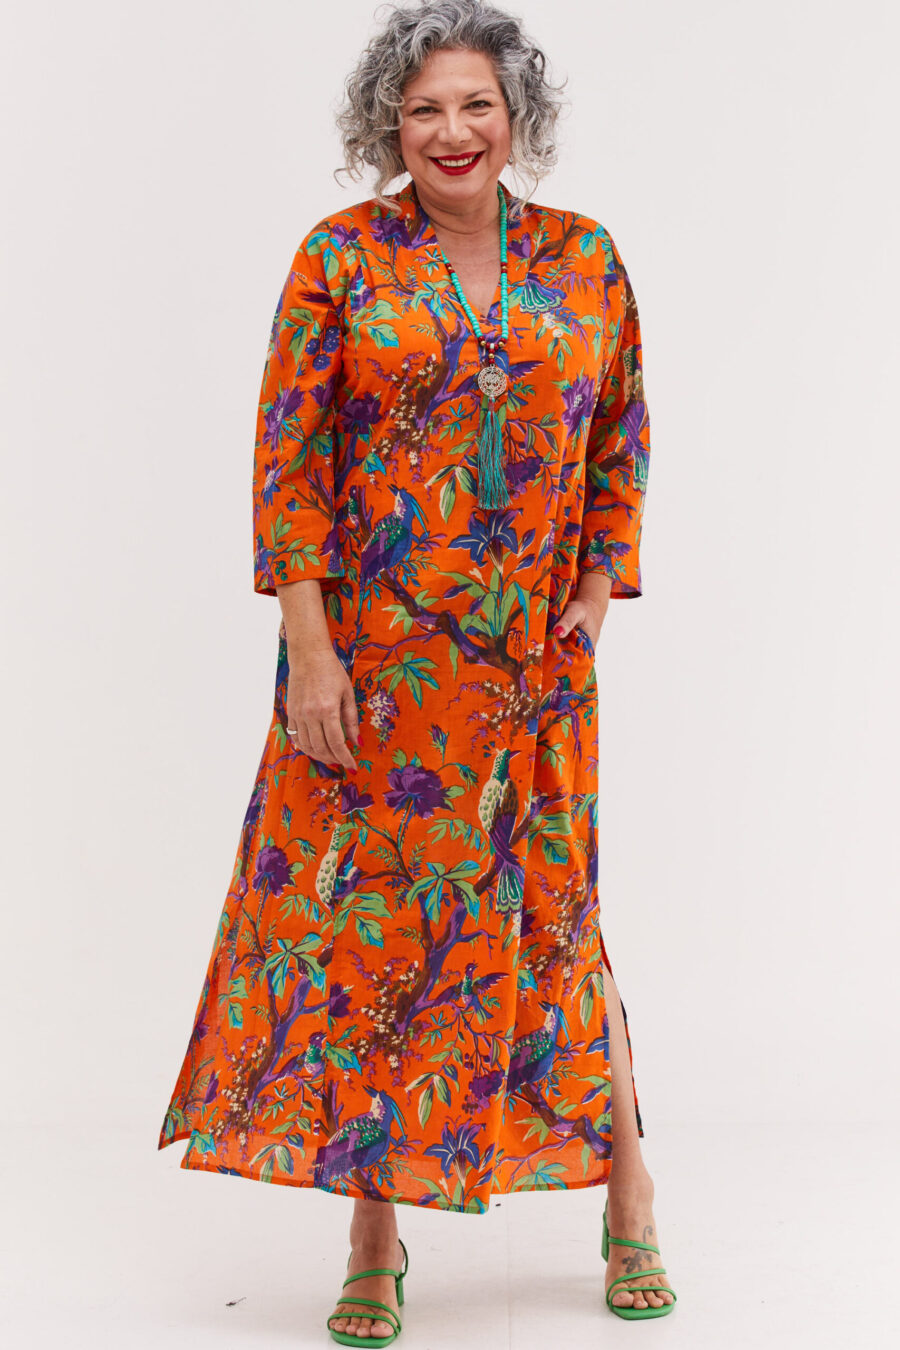 Jalabiya dress | Uniquely designed dress - Orange tropicana, colorful tropical print on an orange backgroung by comfort zone boutique